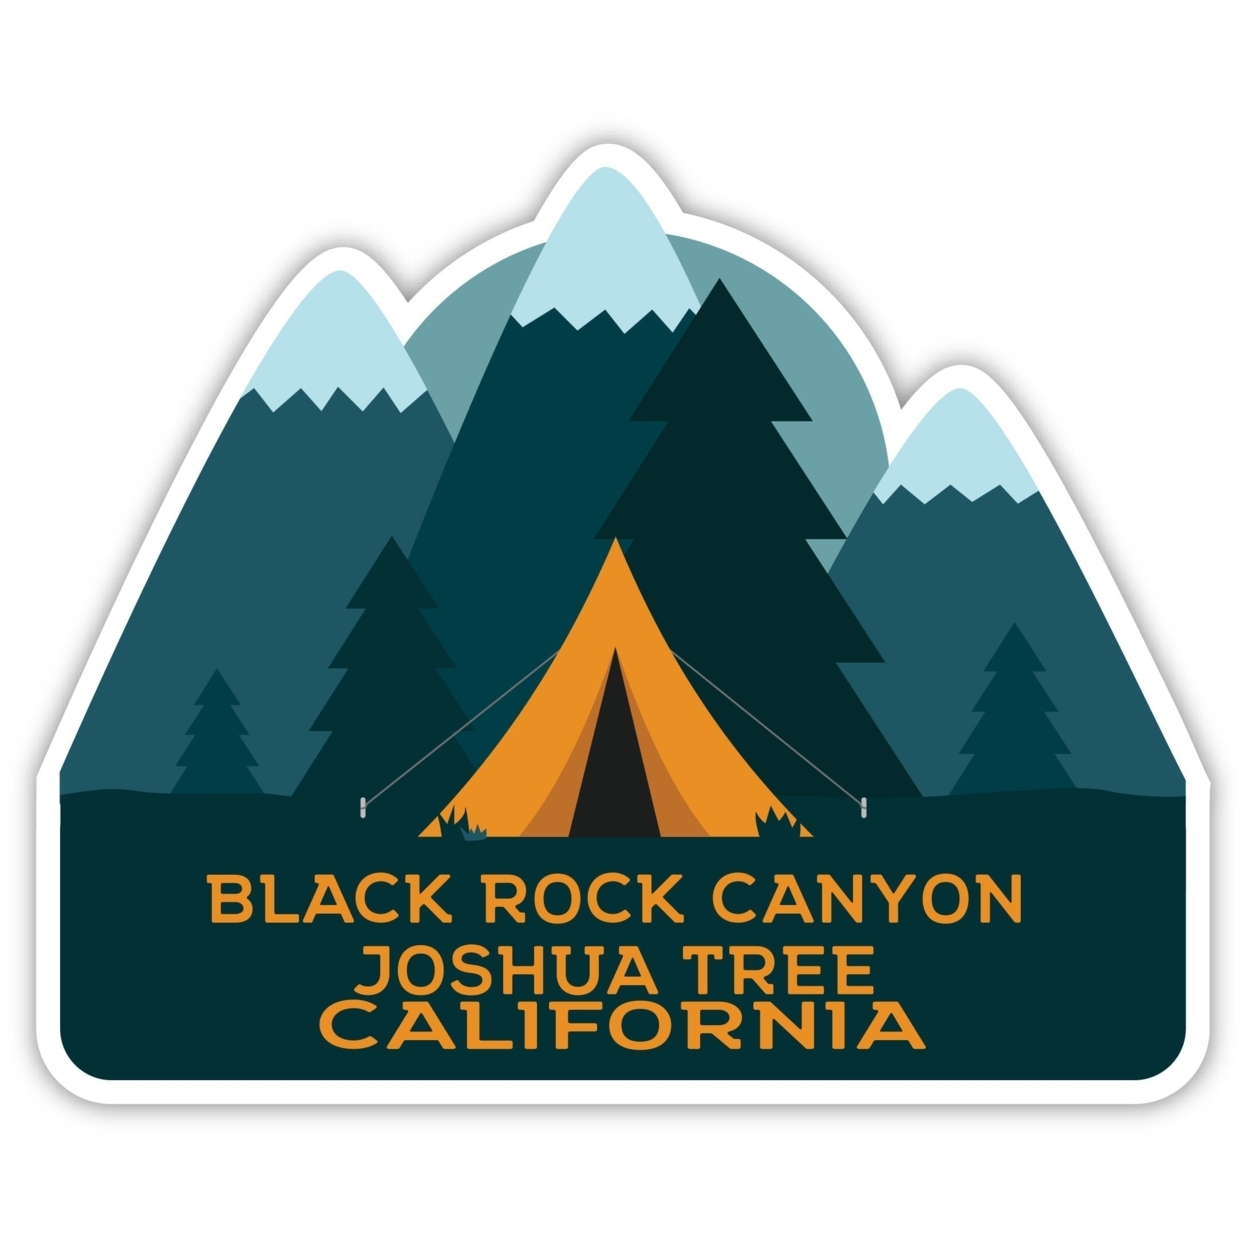 Black Rock Canyon Joshua Tree California Souvenir Decorative Stickers (Choose Theme And Size) - Single Unit, 2-Inch, Bear